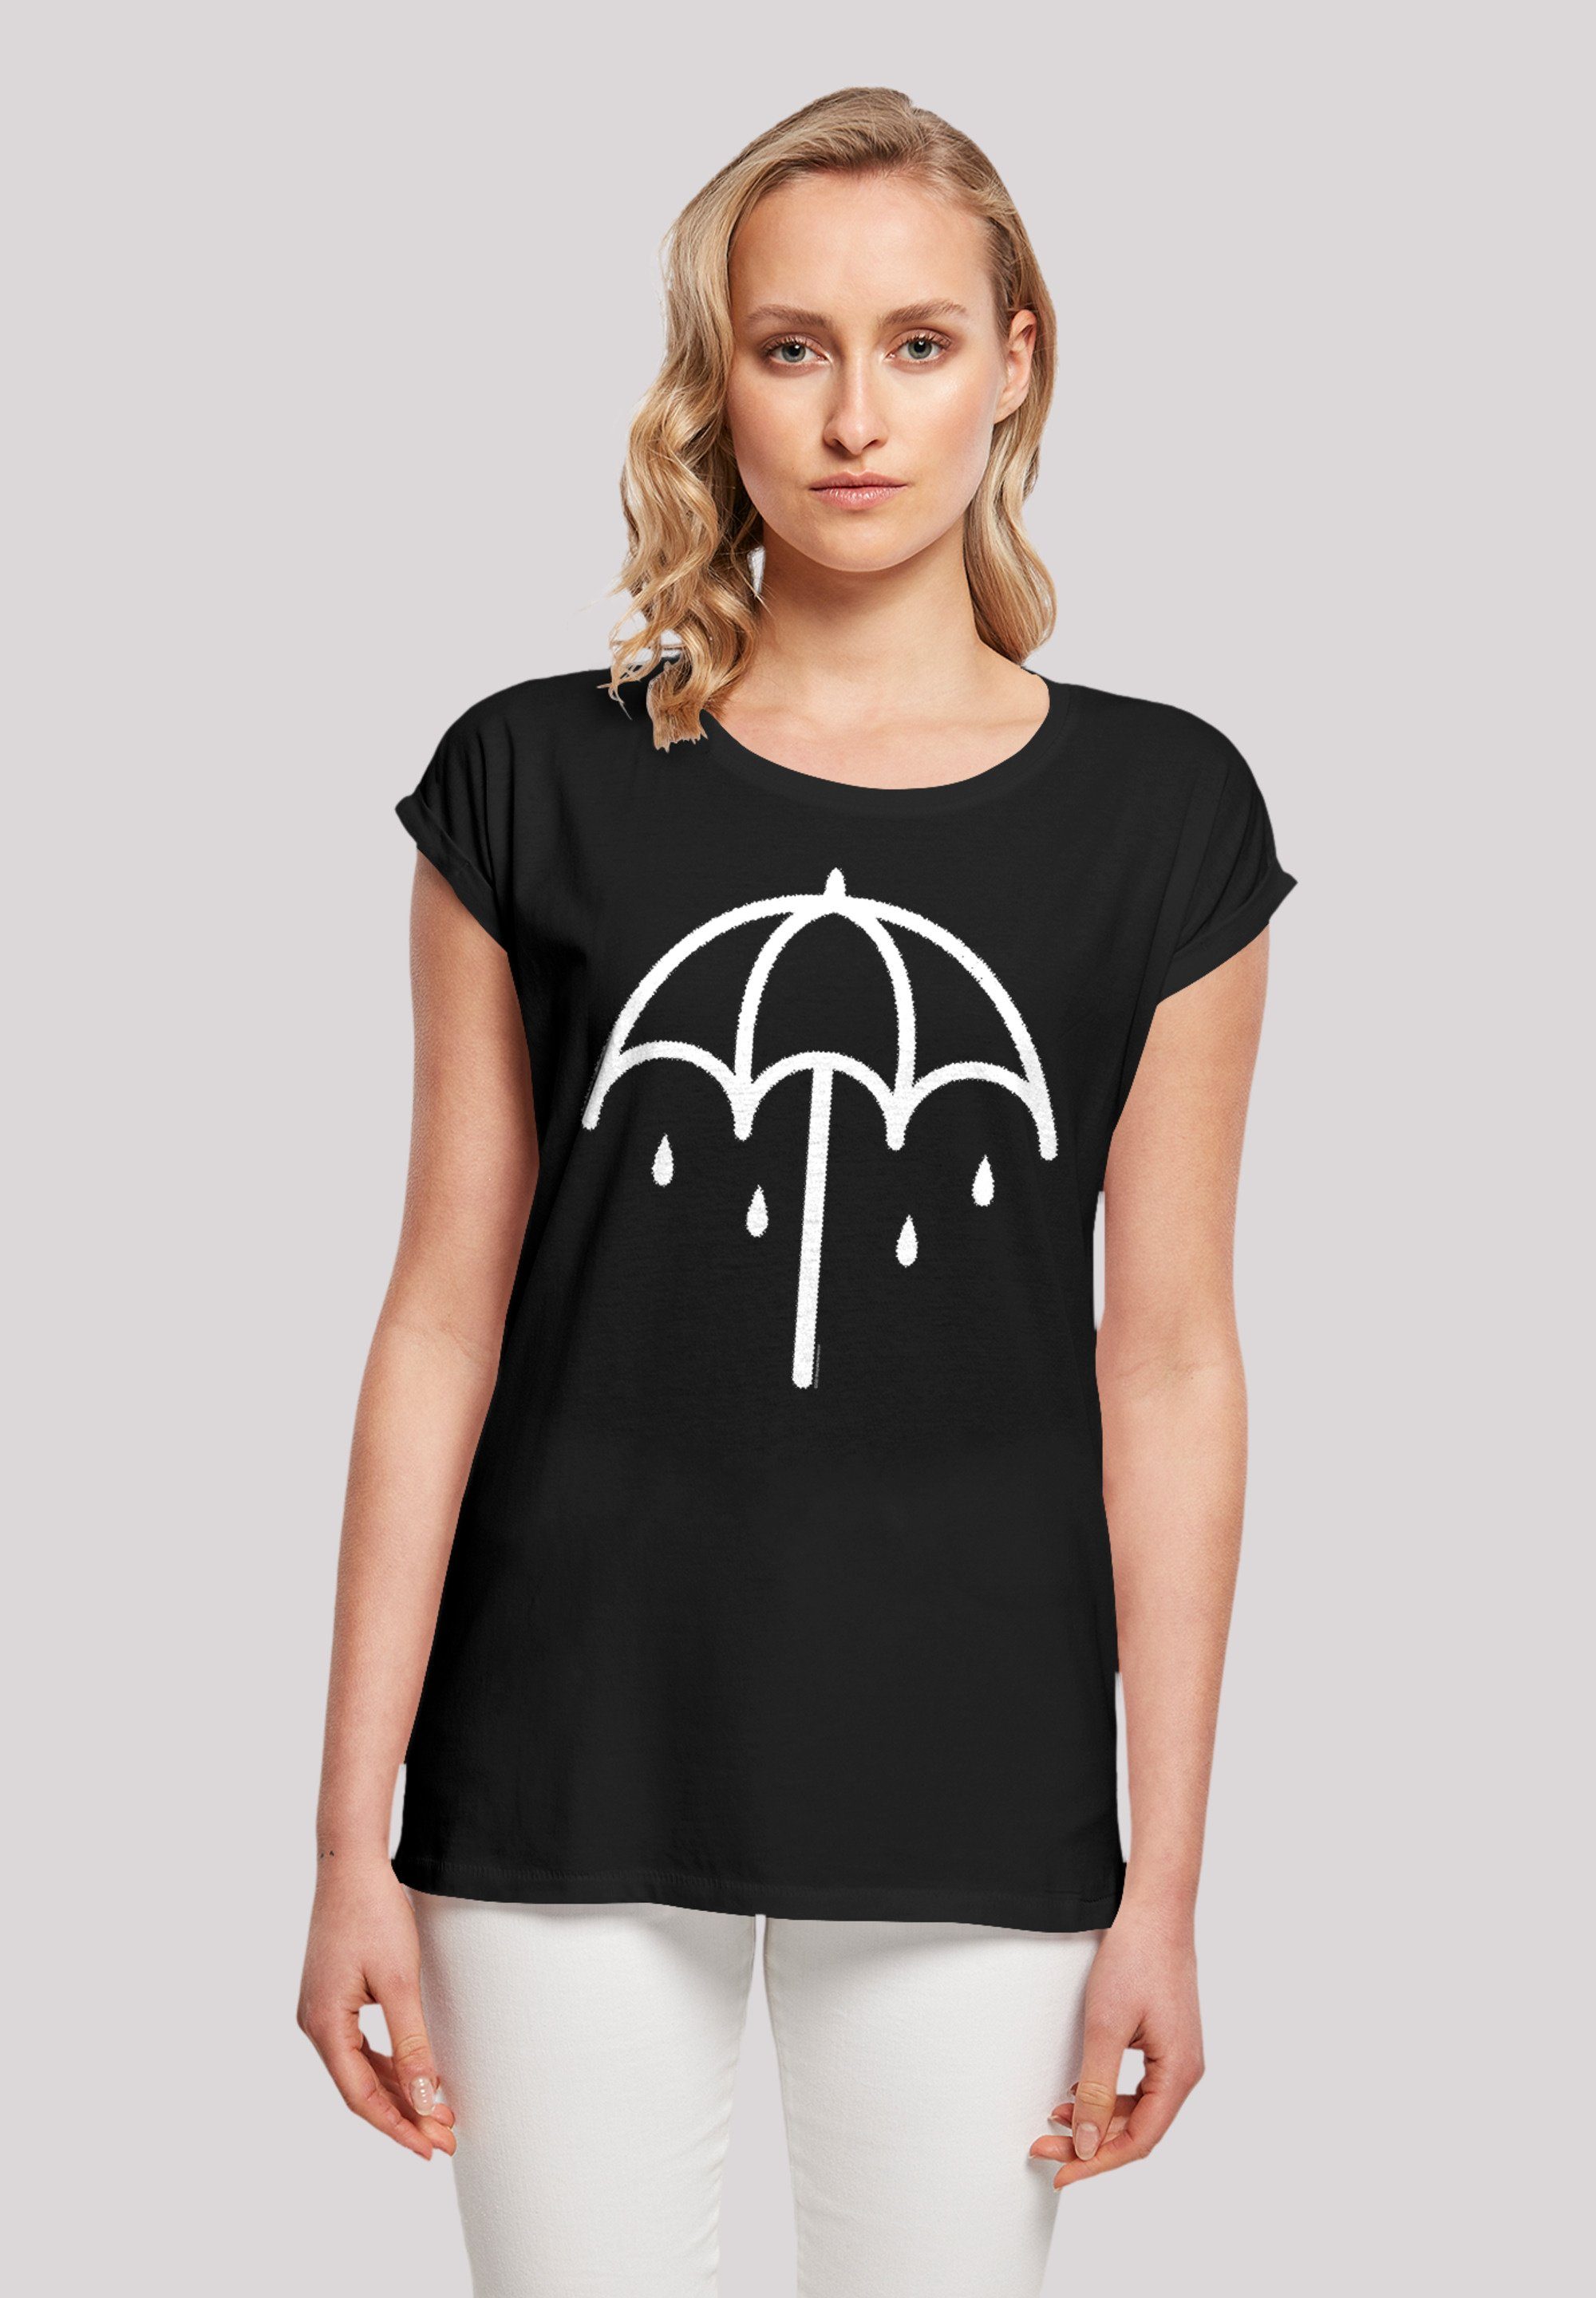 F4NT4STIC T-Shirt BMTH Metal Band Umbrella 2 DARK Premium Qualität, Rock-Musik, Band